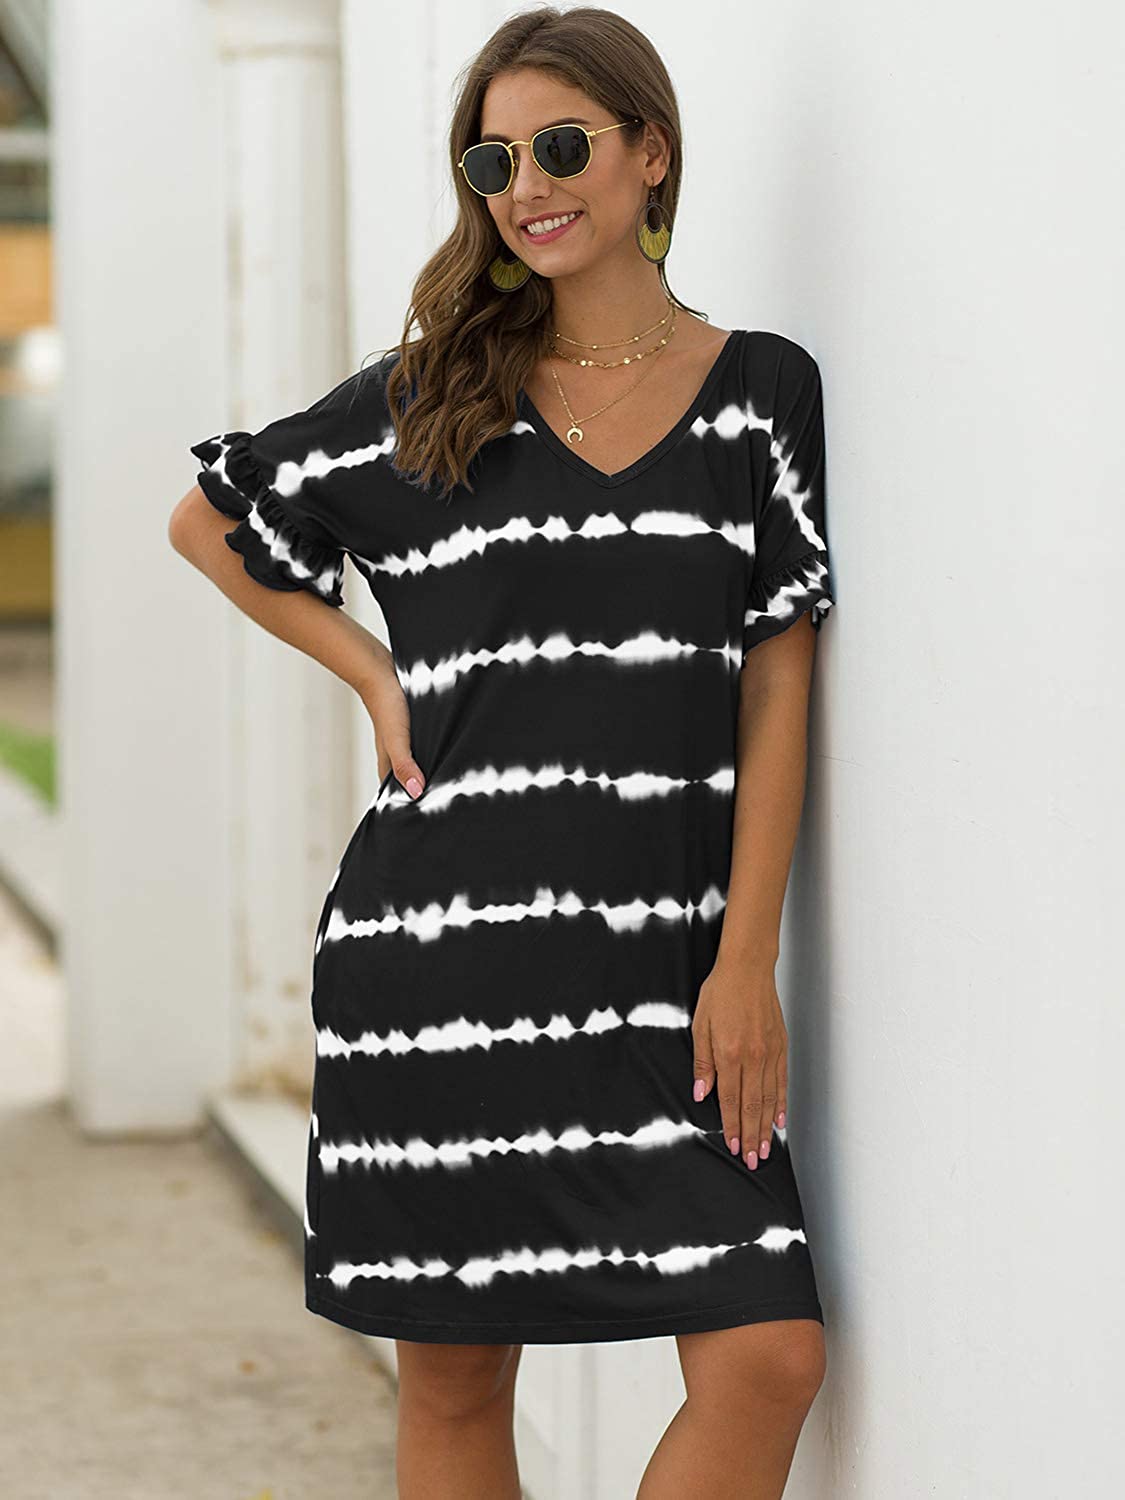 Miessial Women's Casual Striped Tie Dye Print Mini Dress V, Black, Size ...